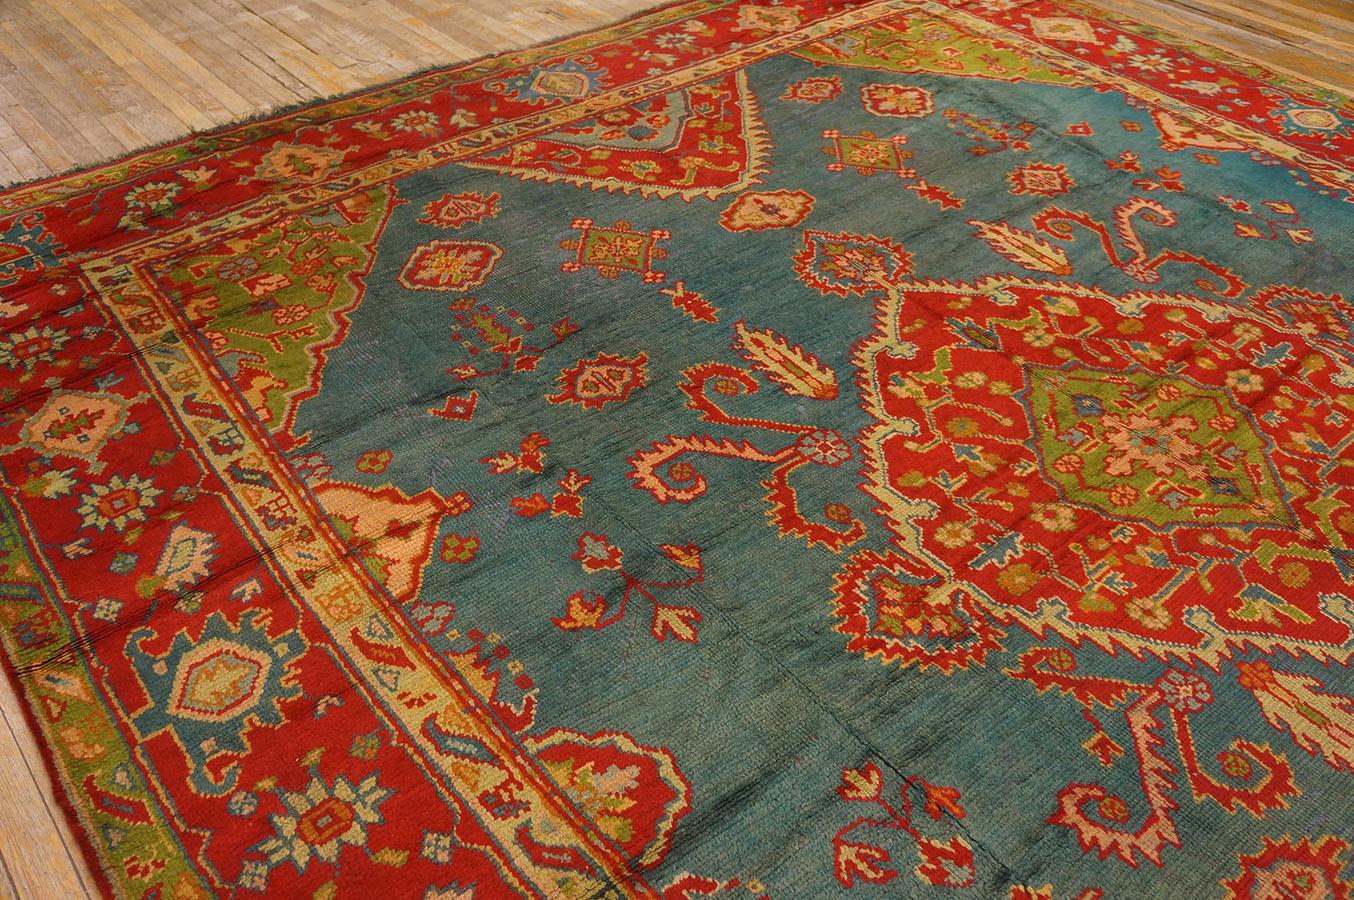 Late 19th Century Turkish Oushak Carpet ( 11' 2'' x 13' 1'' - 340 x 398 cm ) For Sale 3